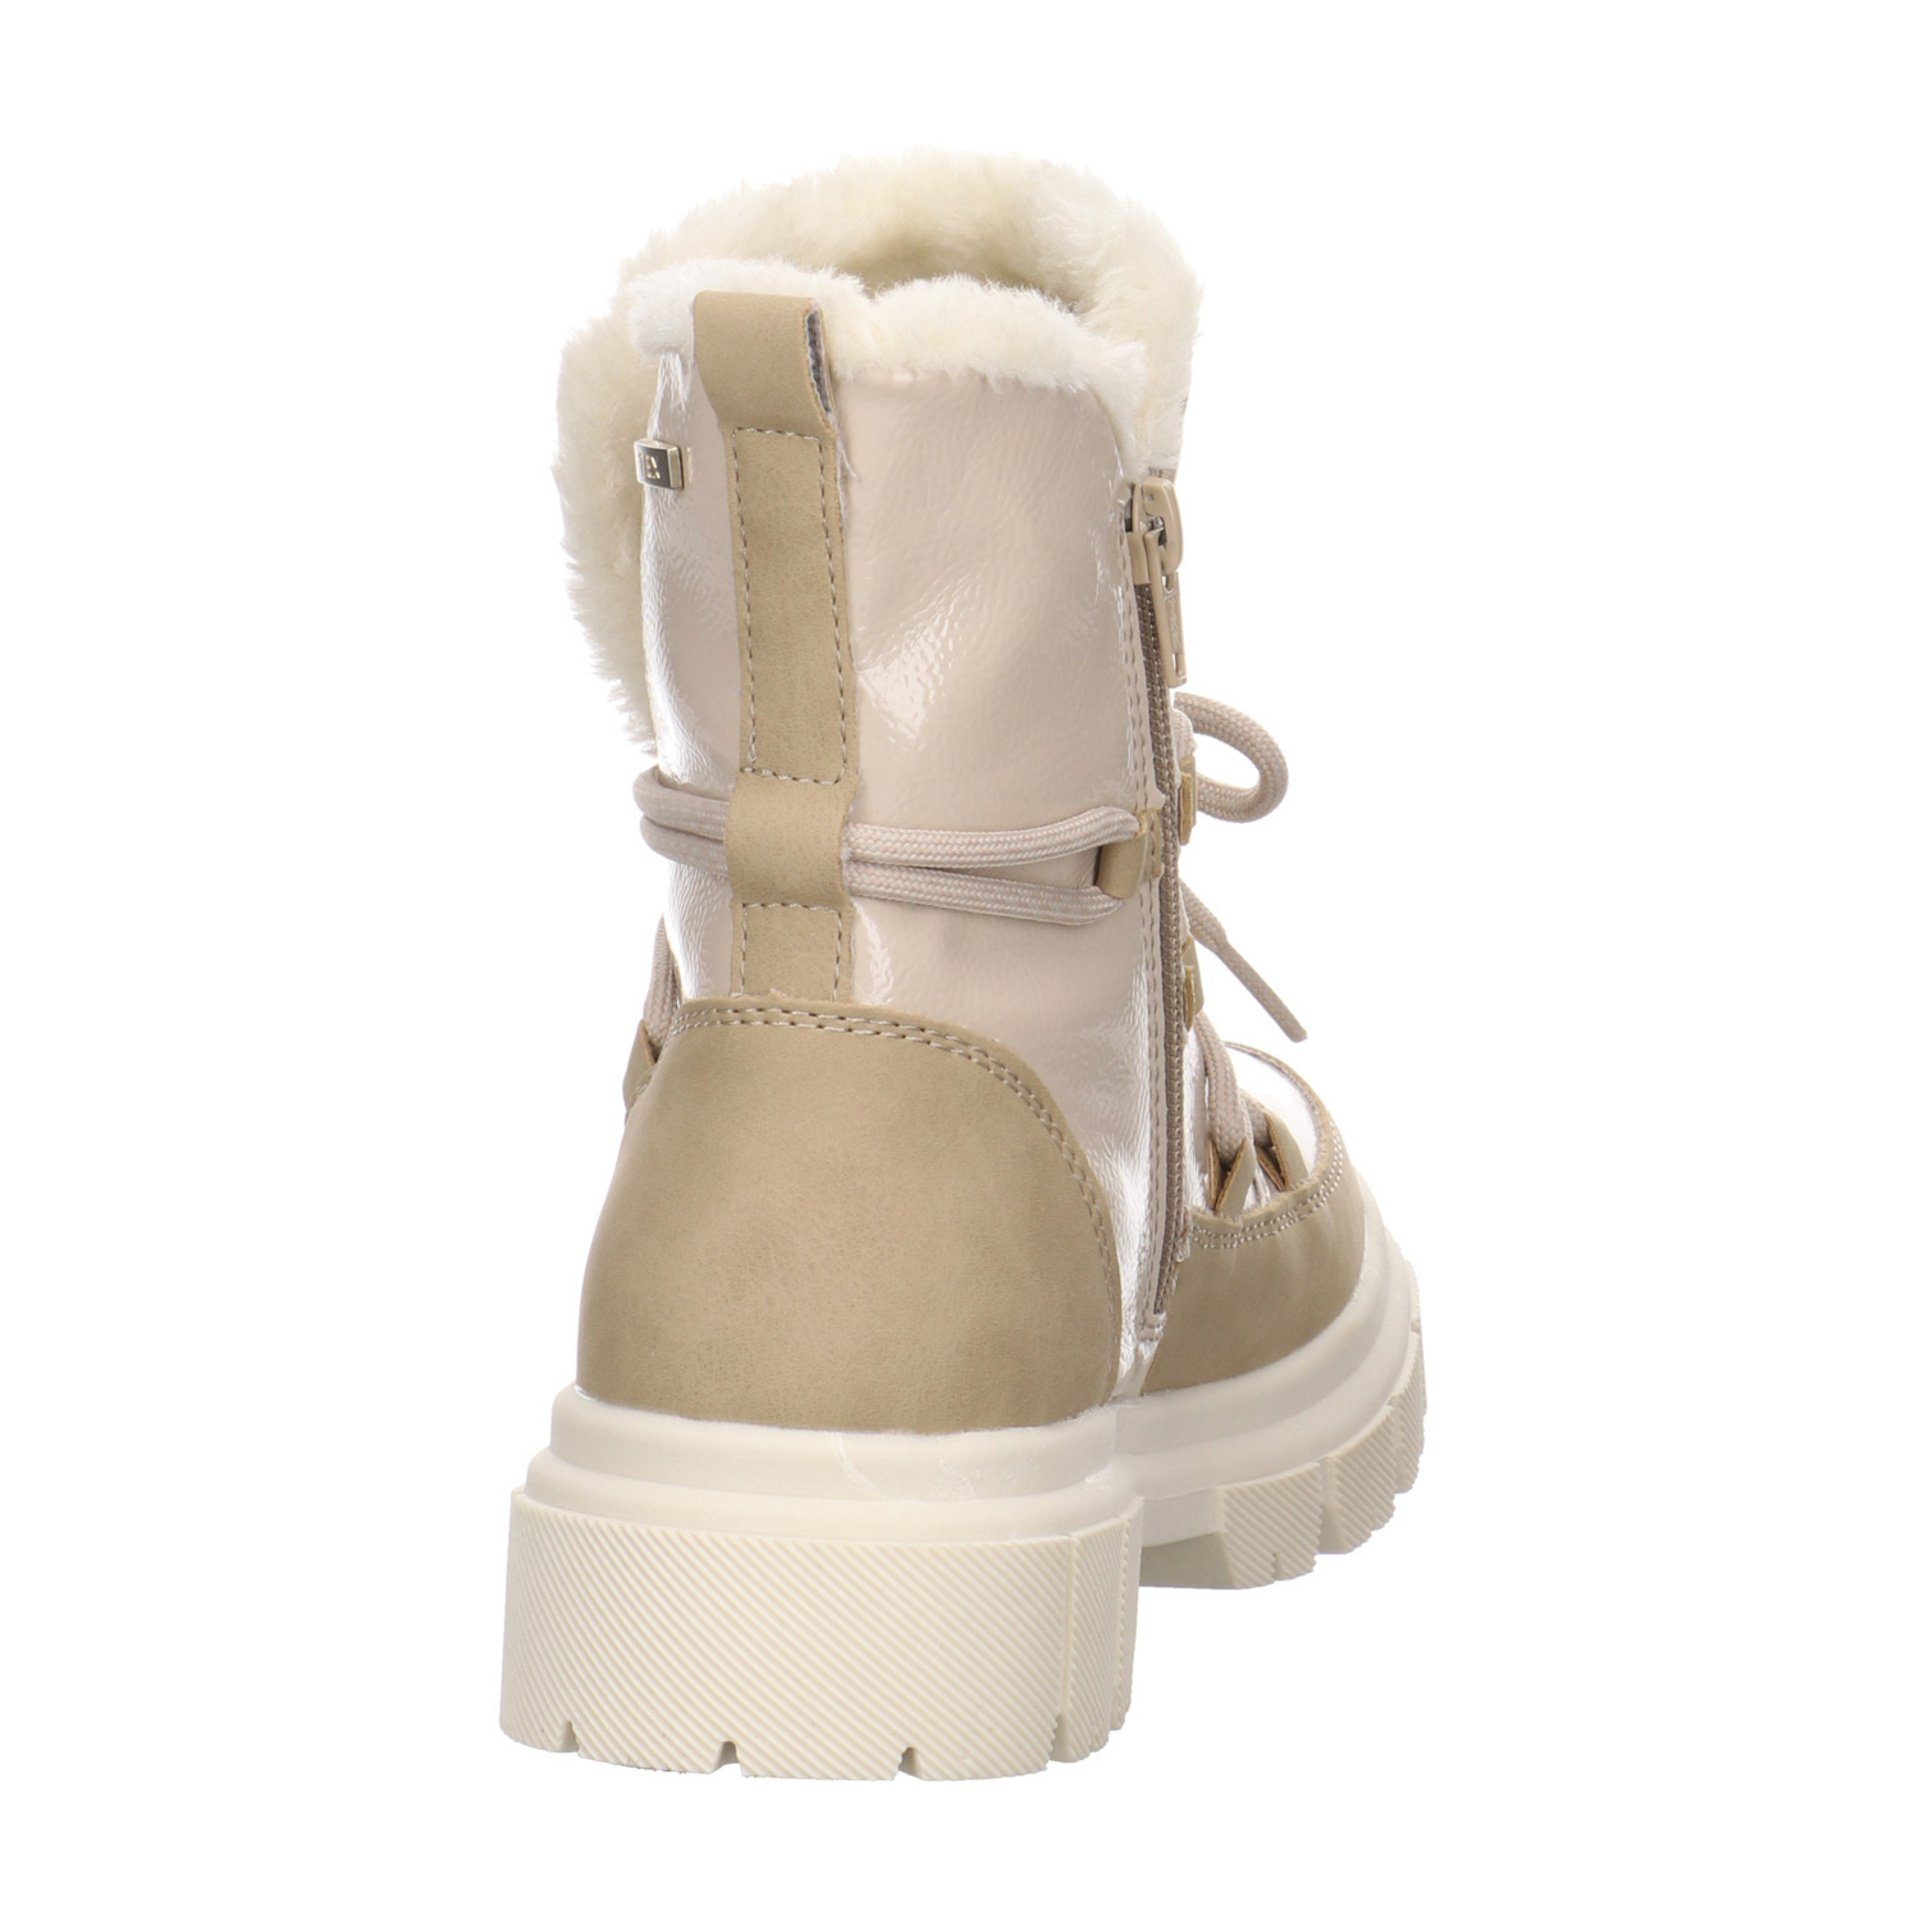 Boots Schuhe Kinderschuhe Mädchen TAILOR TOM Stiefel Stiefelette beige Synthetikkombination